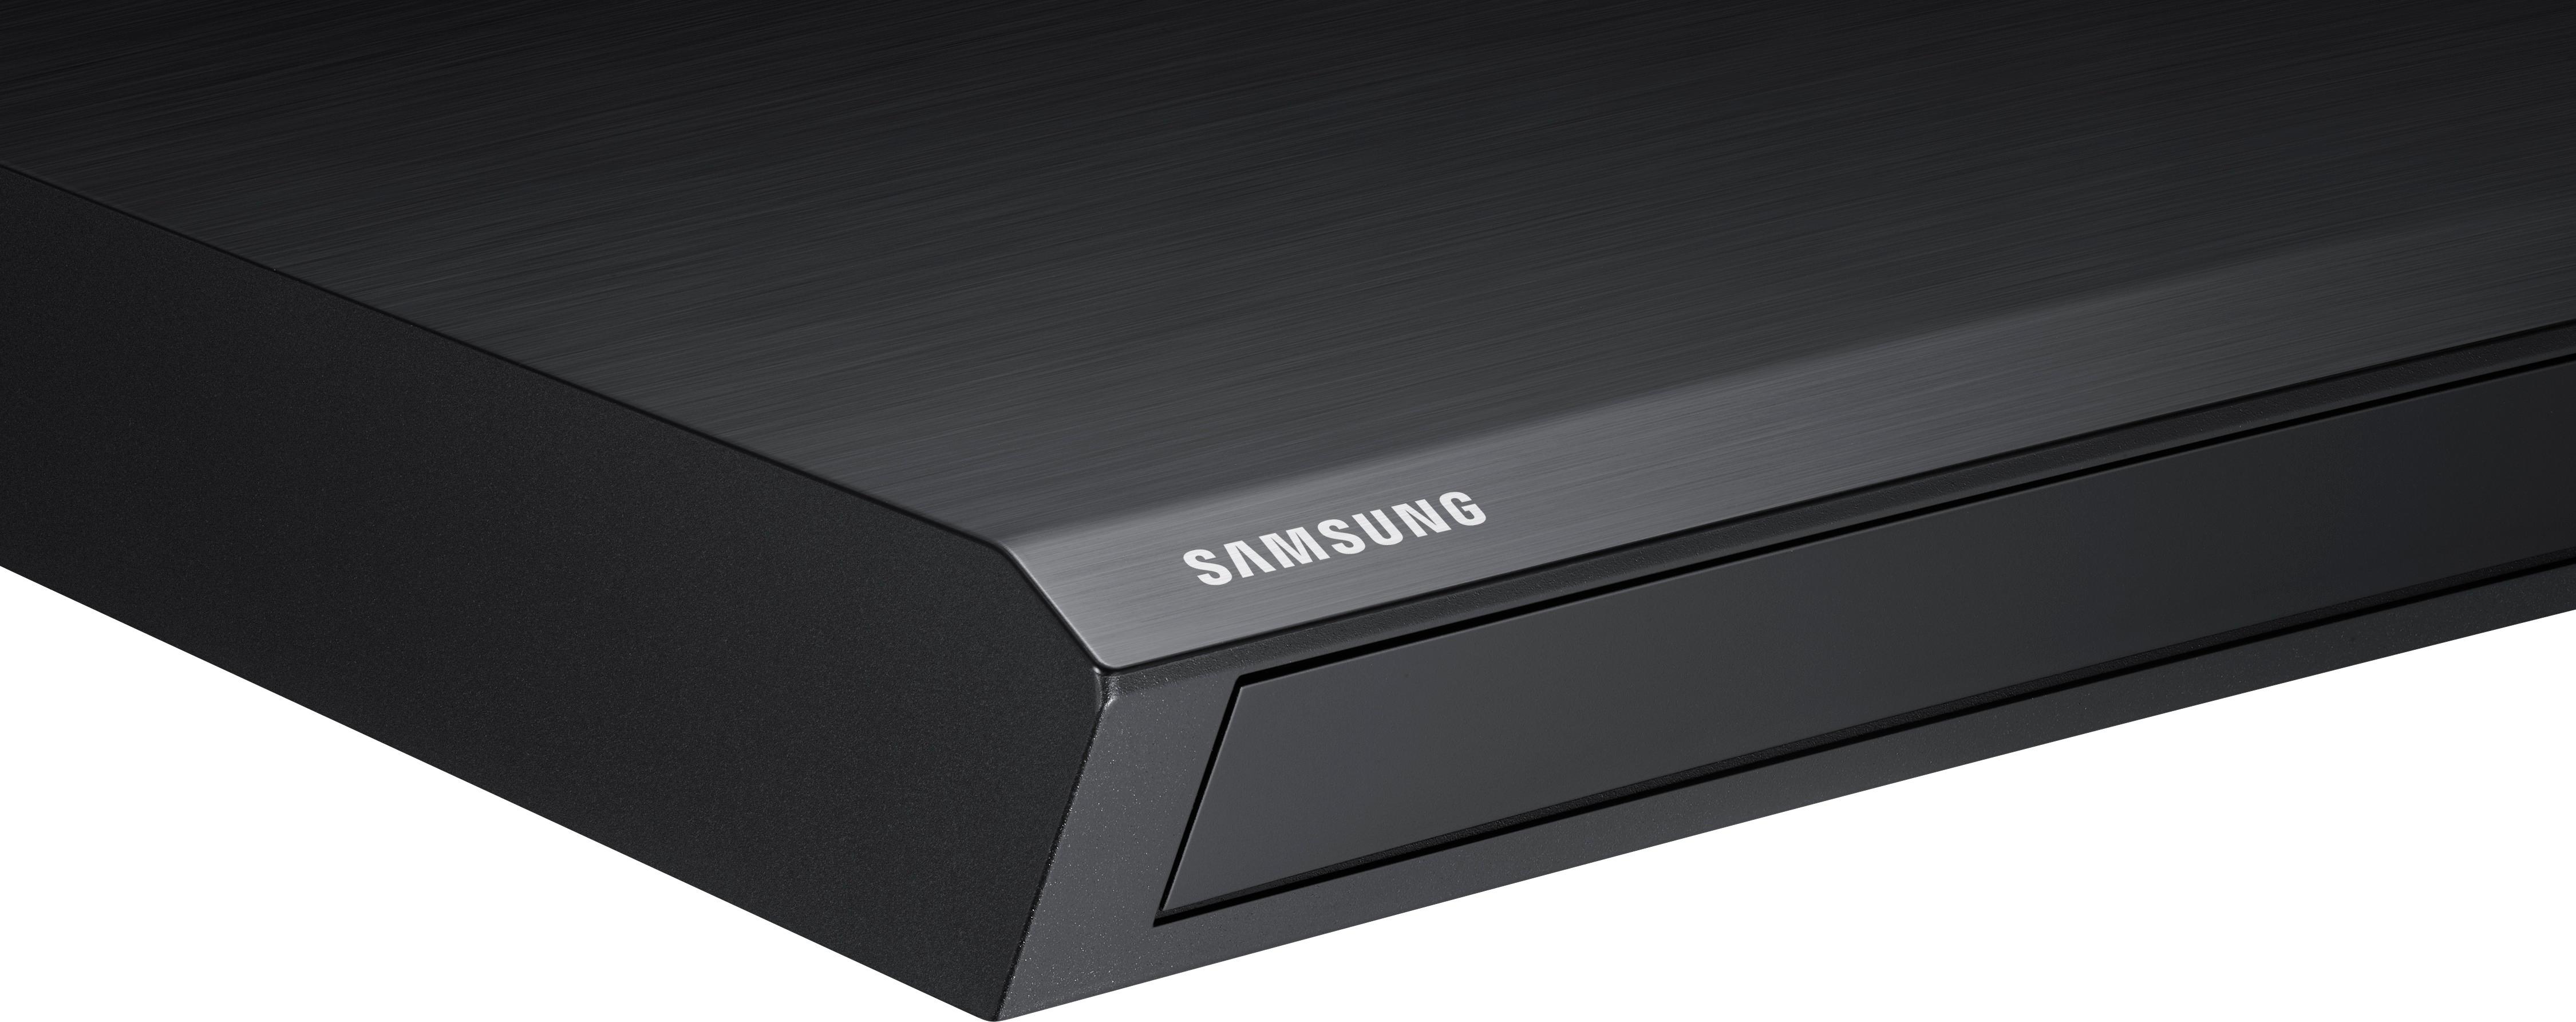 Samsung Streaming 4k Ultra Hd Audio Blu Ray Player Black Ubd M7500 Za Best Buy